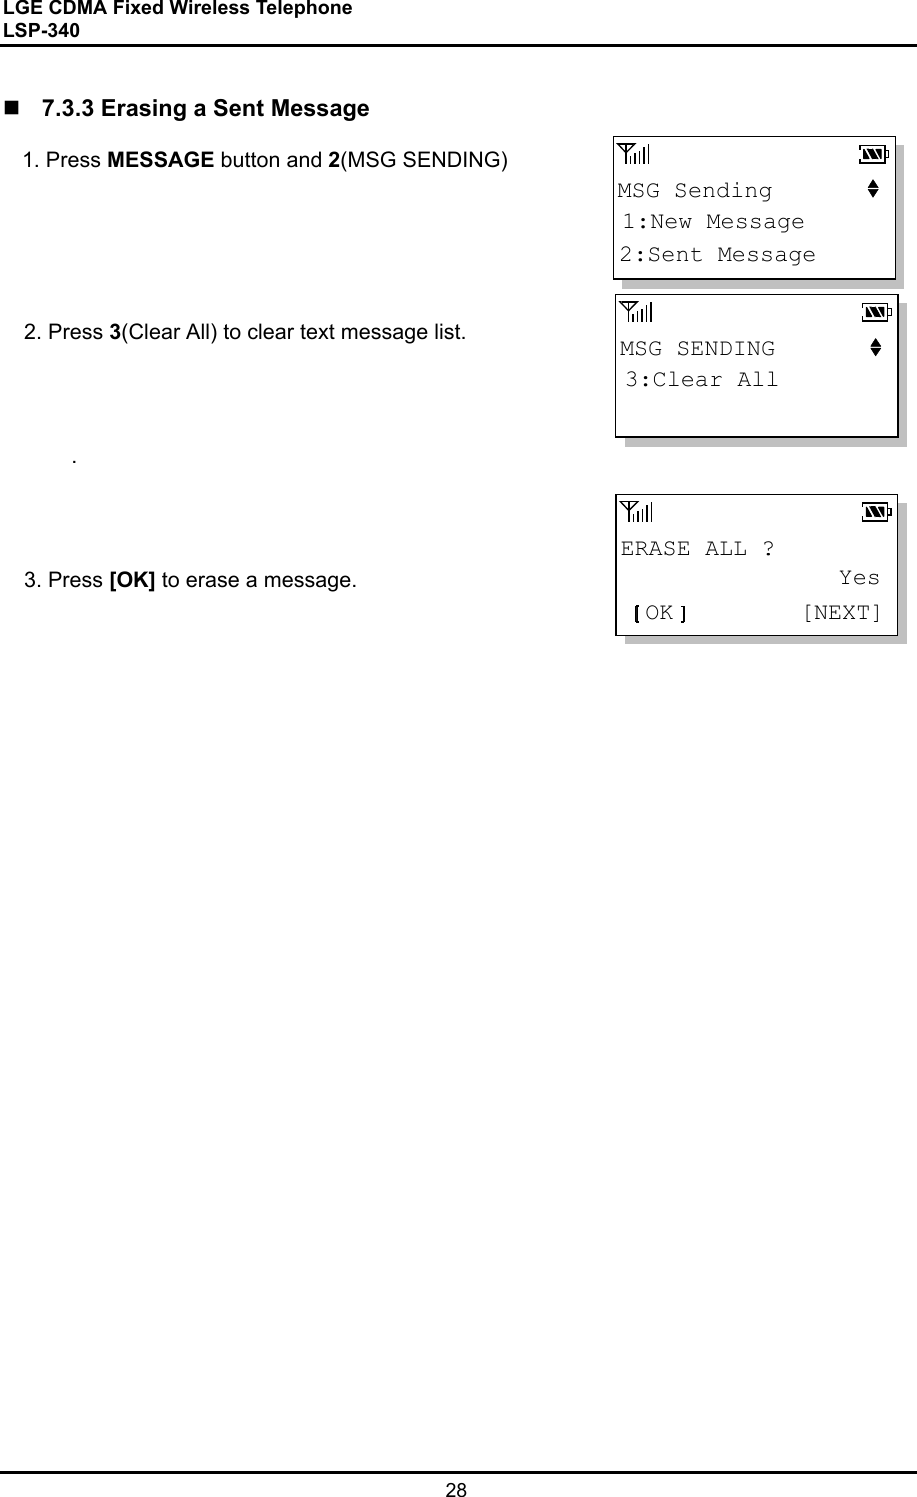 LGE CDMA Fixed Wireless Telephone                                       LSP-340     28  ERASE ALL ?OK [NEXT]YesMSG Sending2:Sent Message1:New MessageMSG SENDING3:Clear All  7.3.3 Erasing a Sent Message   1. Press MESSAGE button and 2(MSG SENDING)          2. Press 3(Clear All) to clear text message list.       .          3. Press [OK] to erase a message.                                      